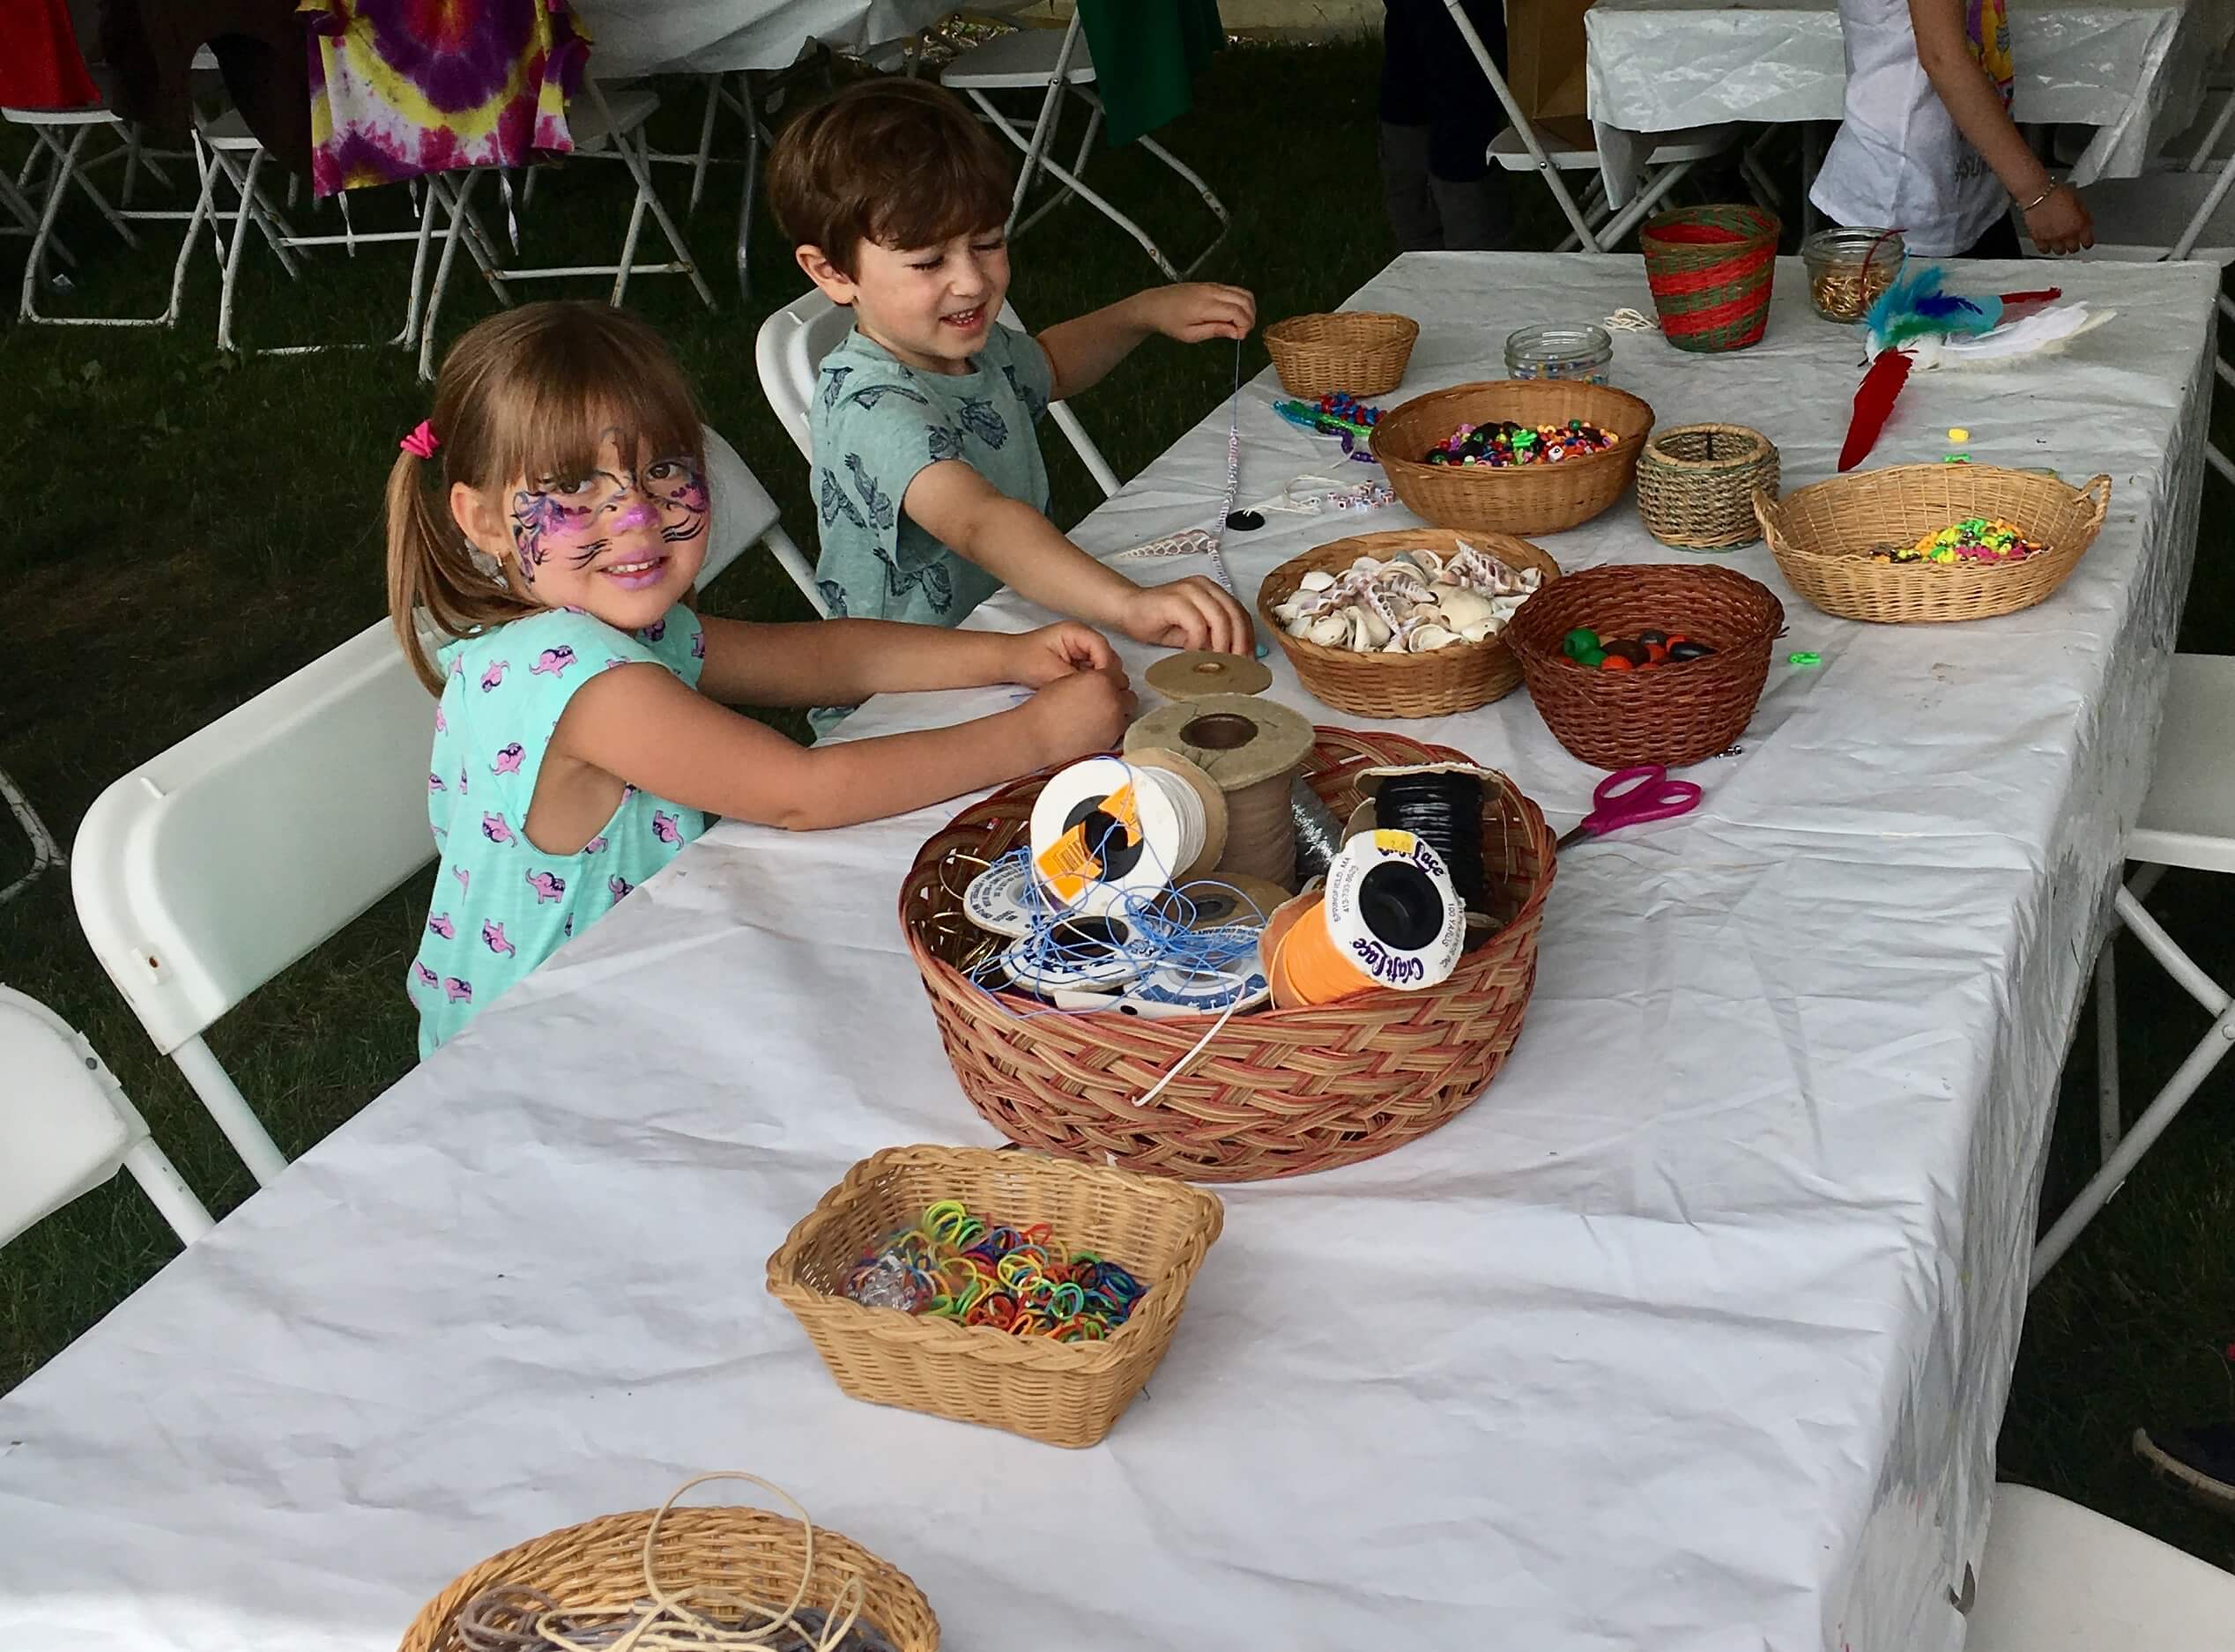 children's tent art and crafts Woodstock New Paltz Art & Crafts Fair